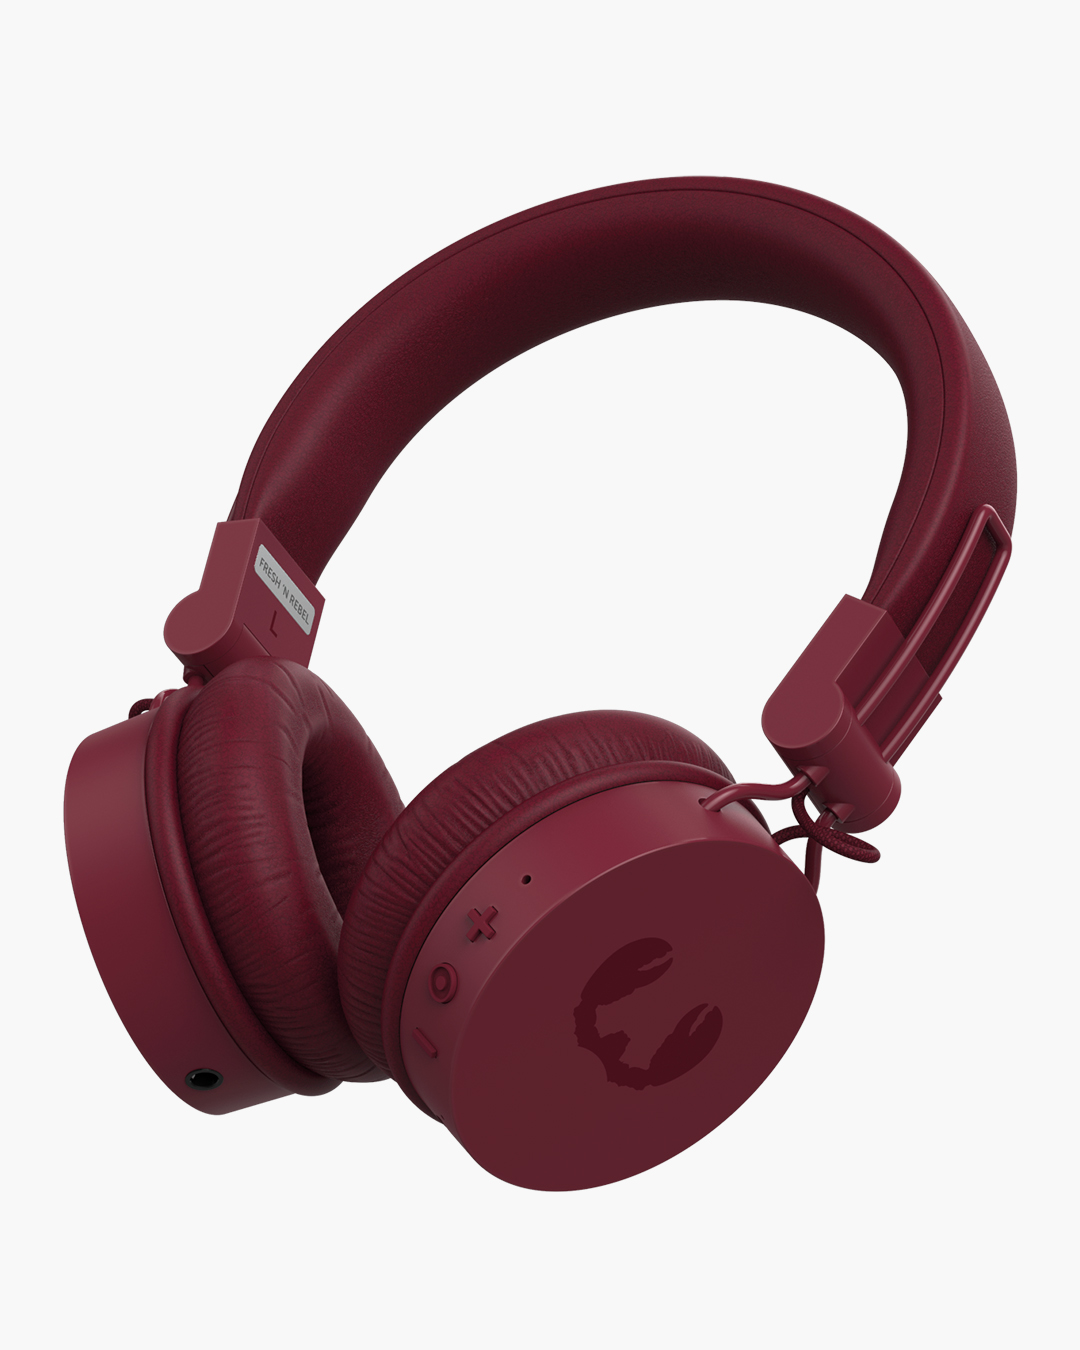 Fresh 'n Rebel - Caps 2 Wireless - Wireless on-ear headphones - Ruby Red